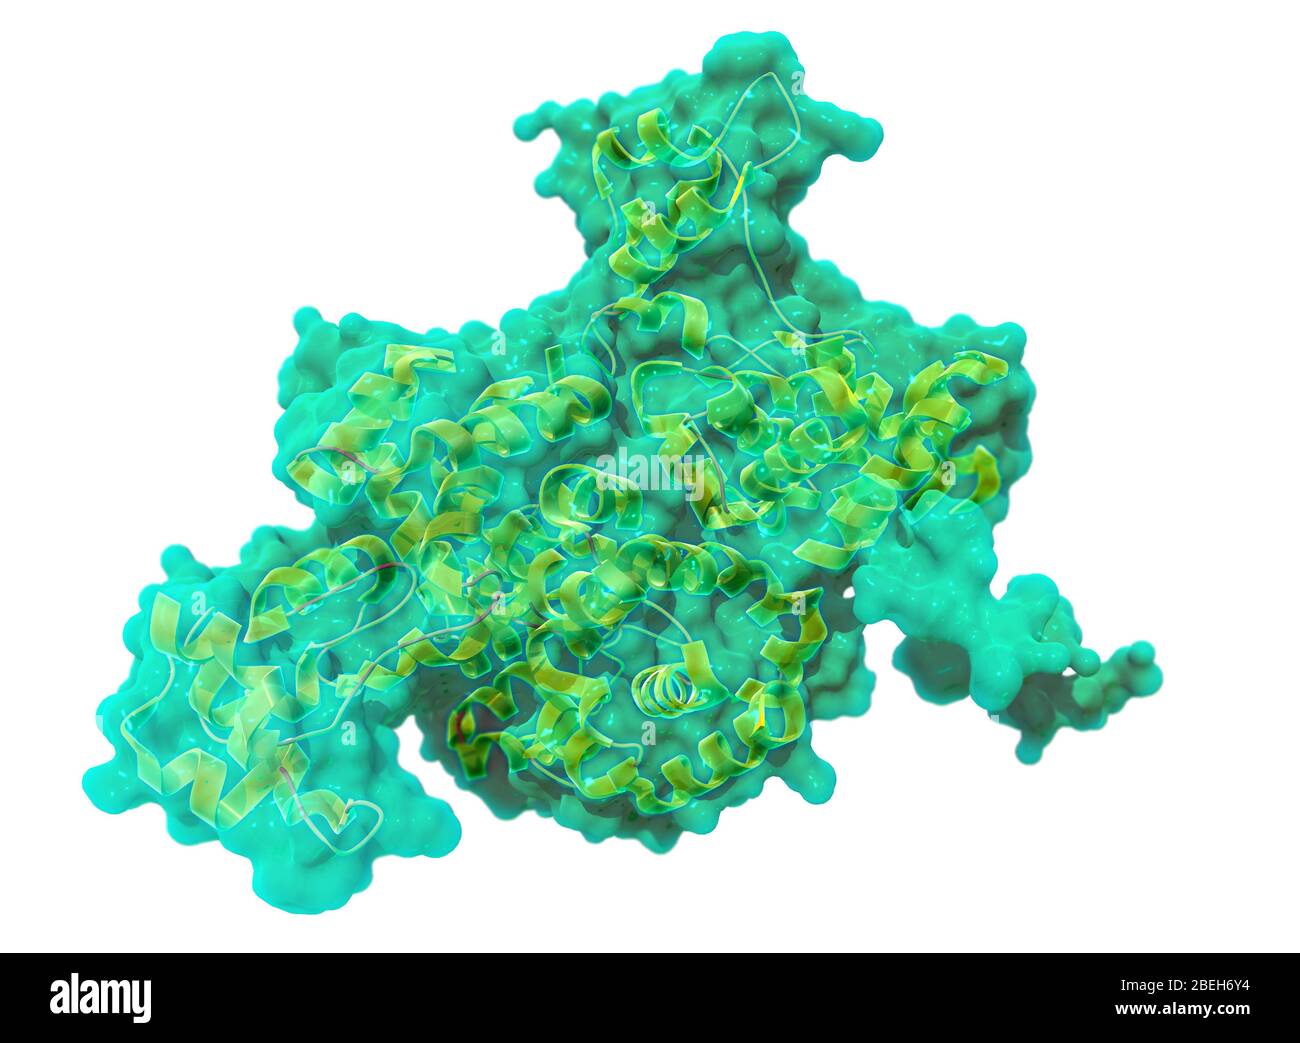 Endolysin, Molecular Model Stock Photo